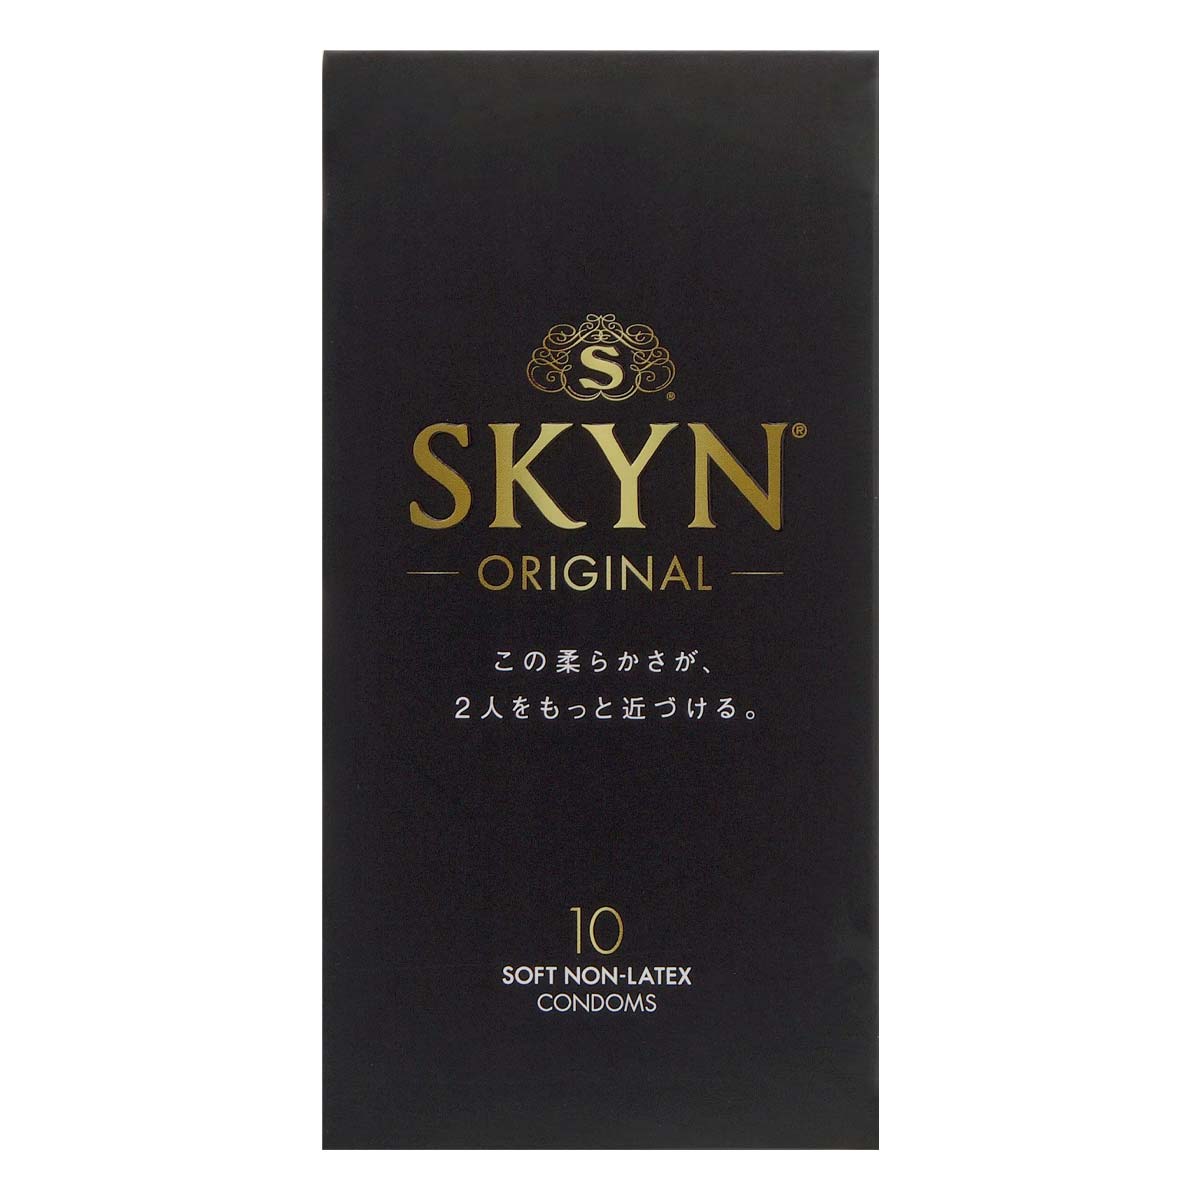 SKYN Original 10's Pack iR Condom-p_2